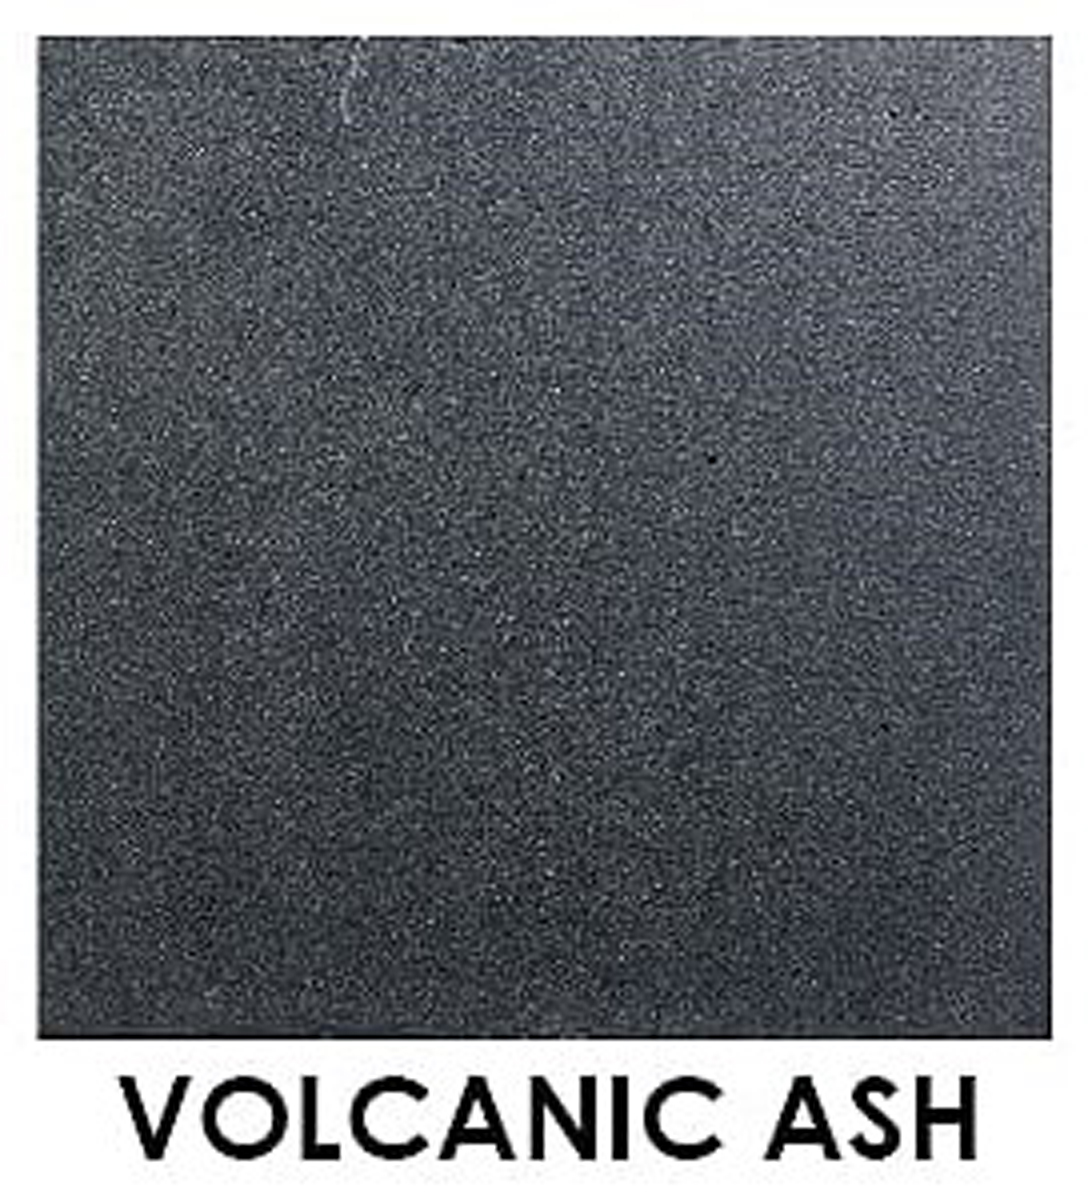 33 inch falo fire bowl – volcanic ash thumbnail image